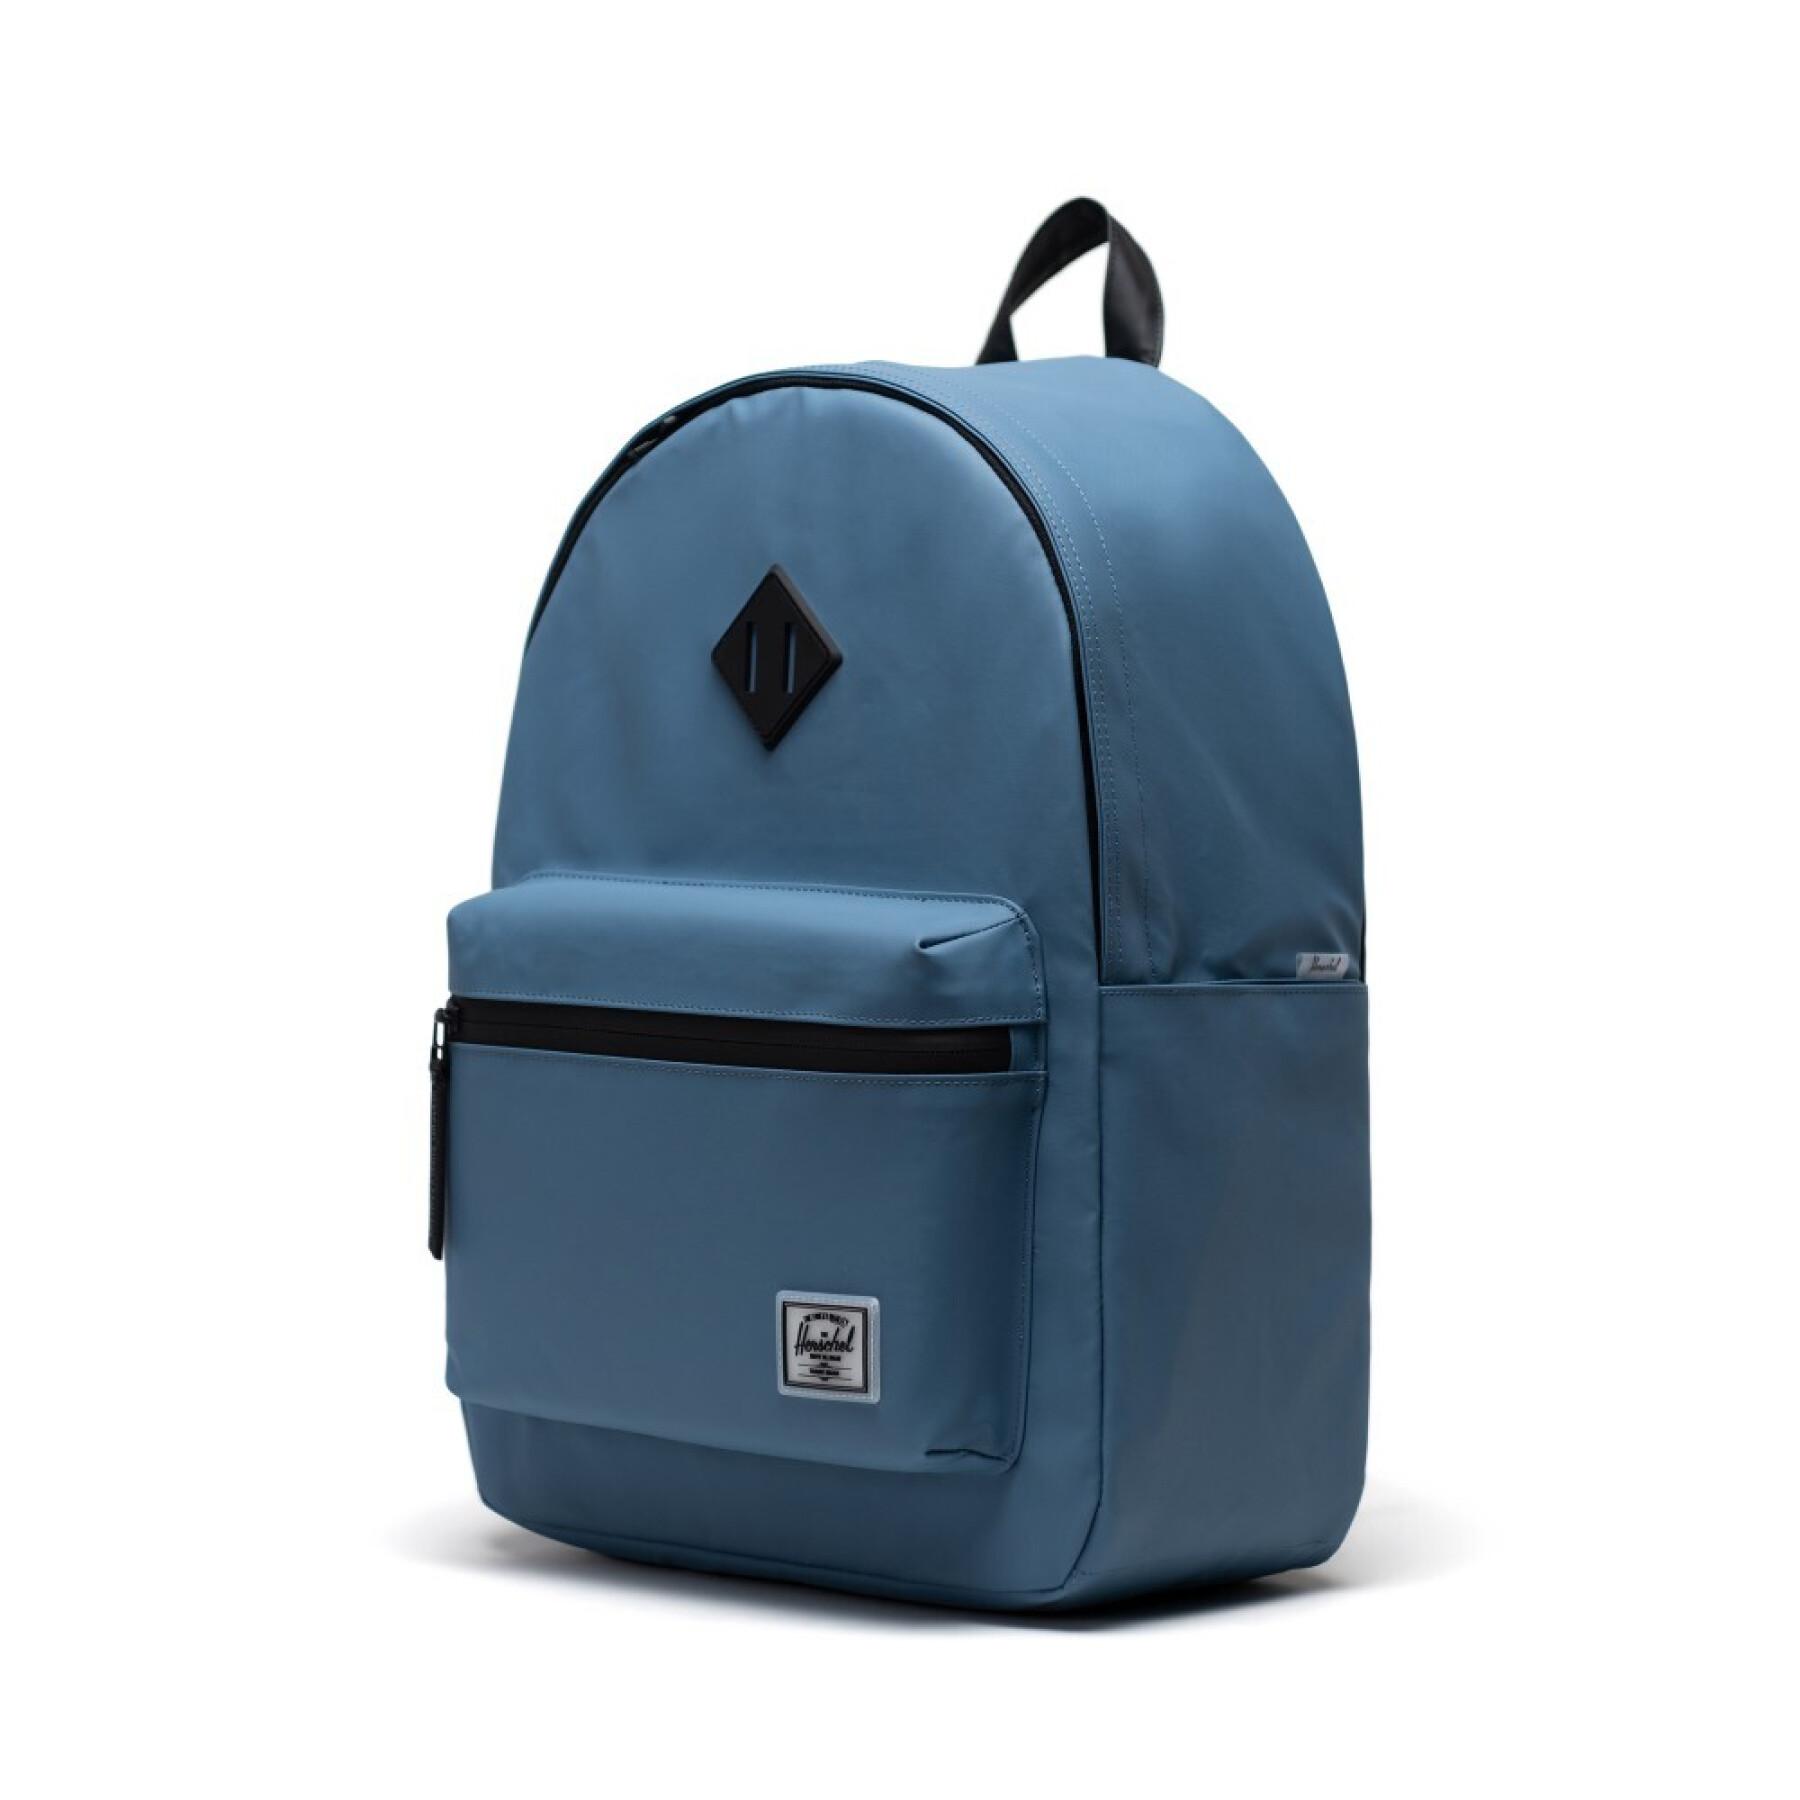 Backpack Herschel Classic - Backpacks - Bags - Equipment